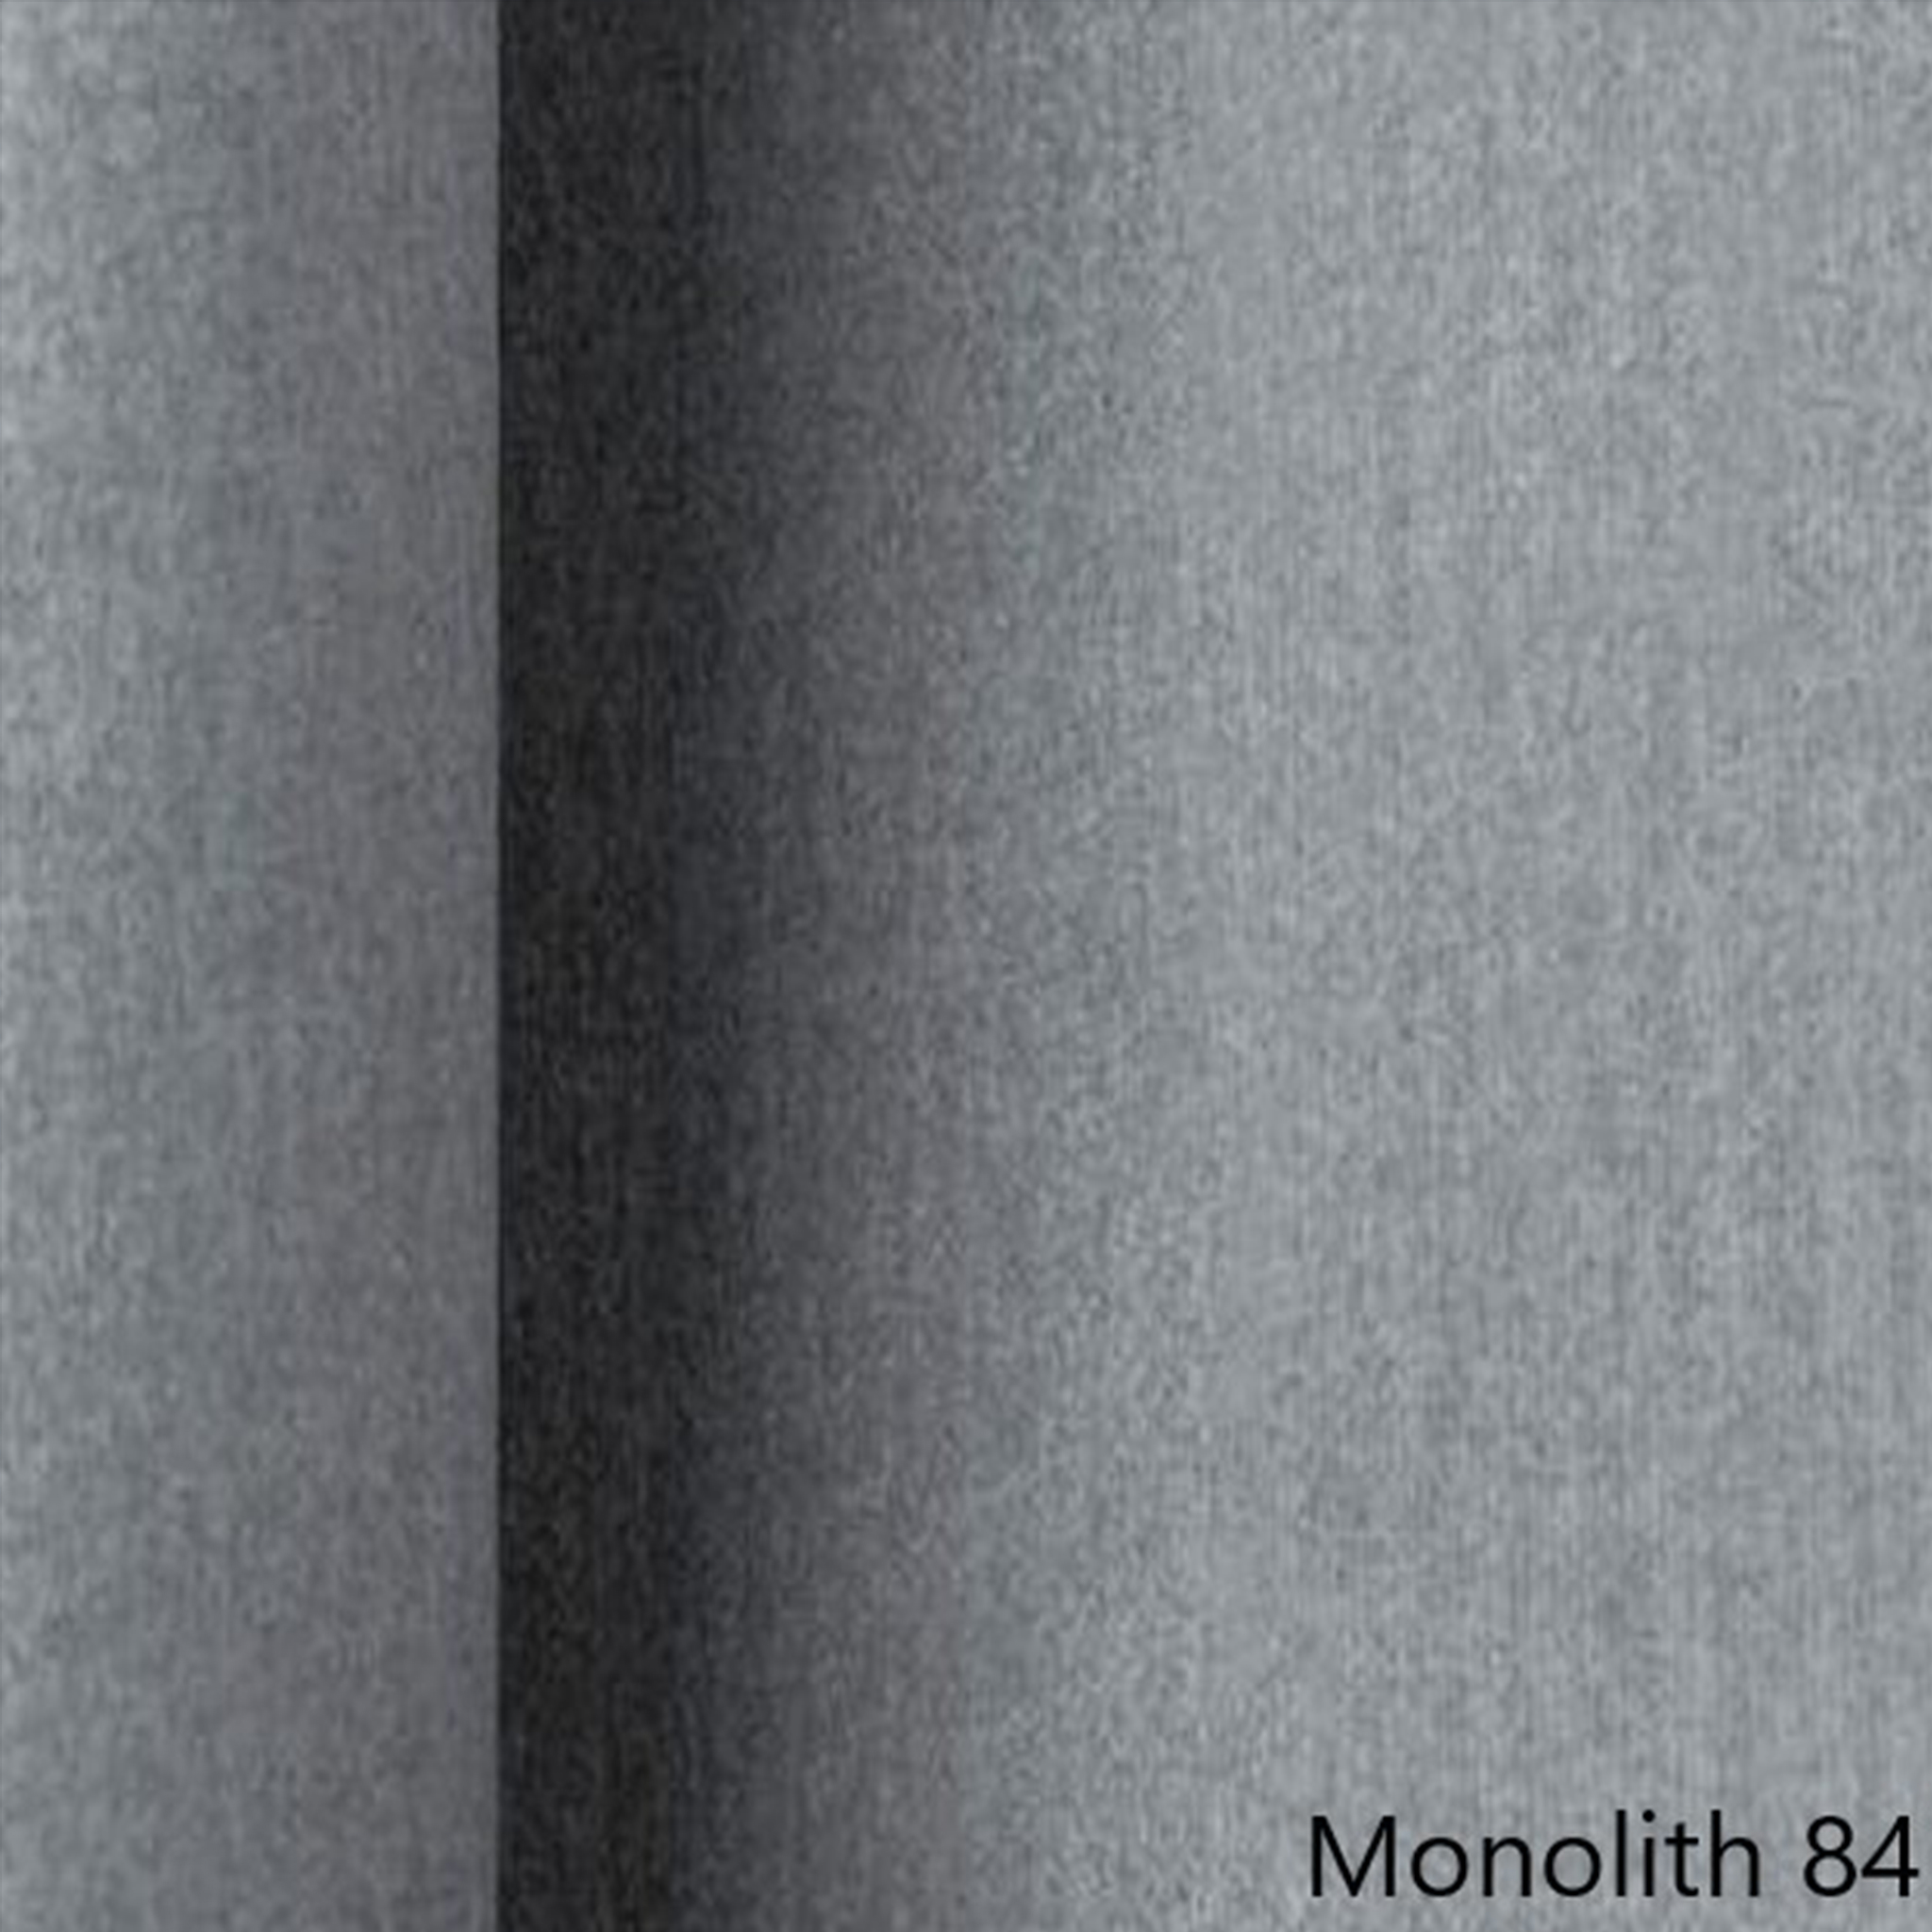 GR. 2 – Monolith 84